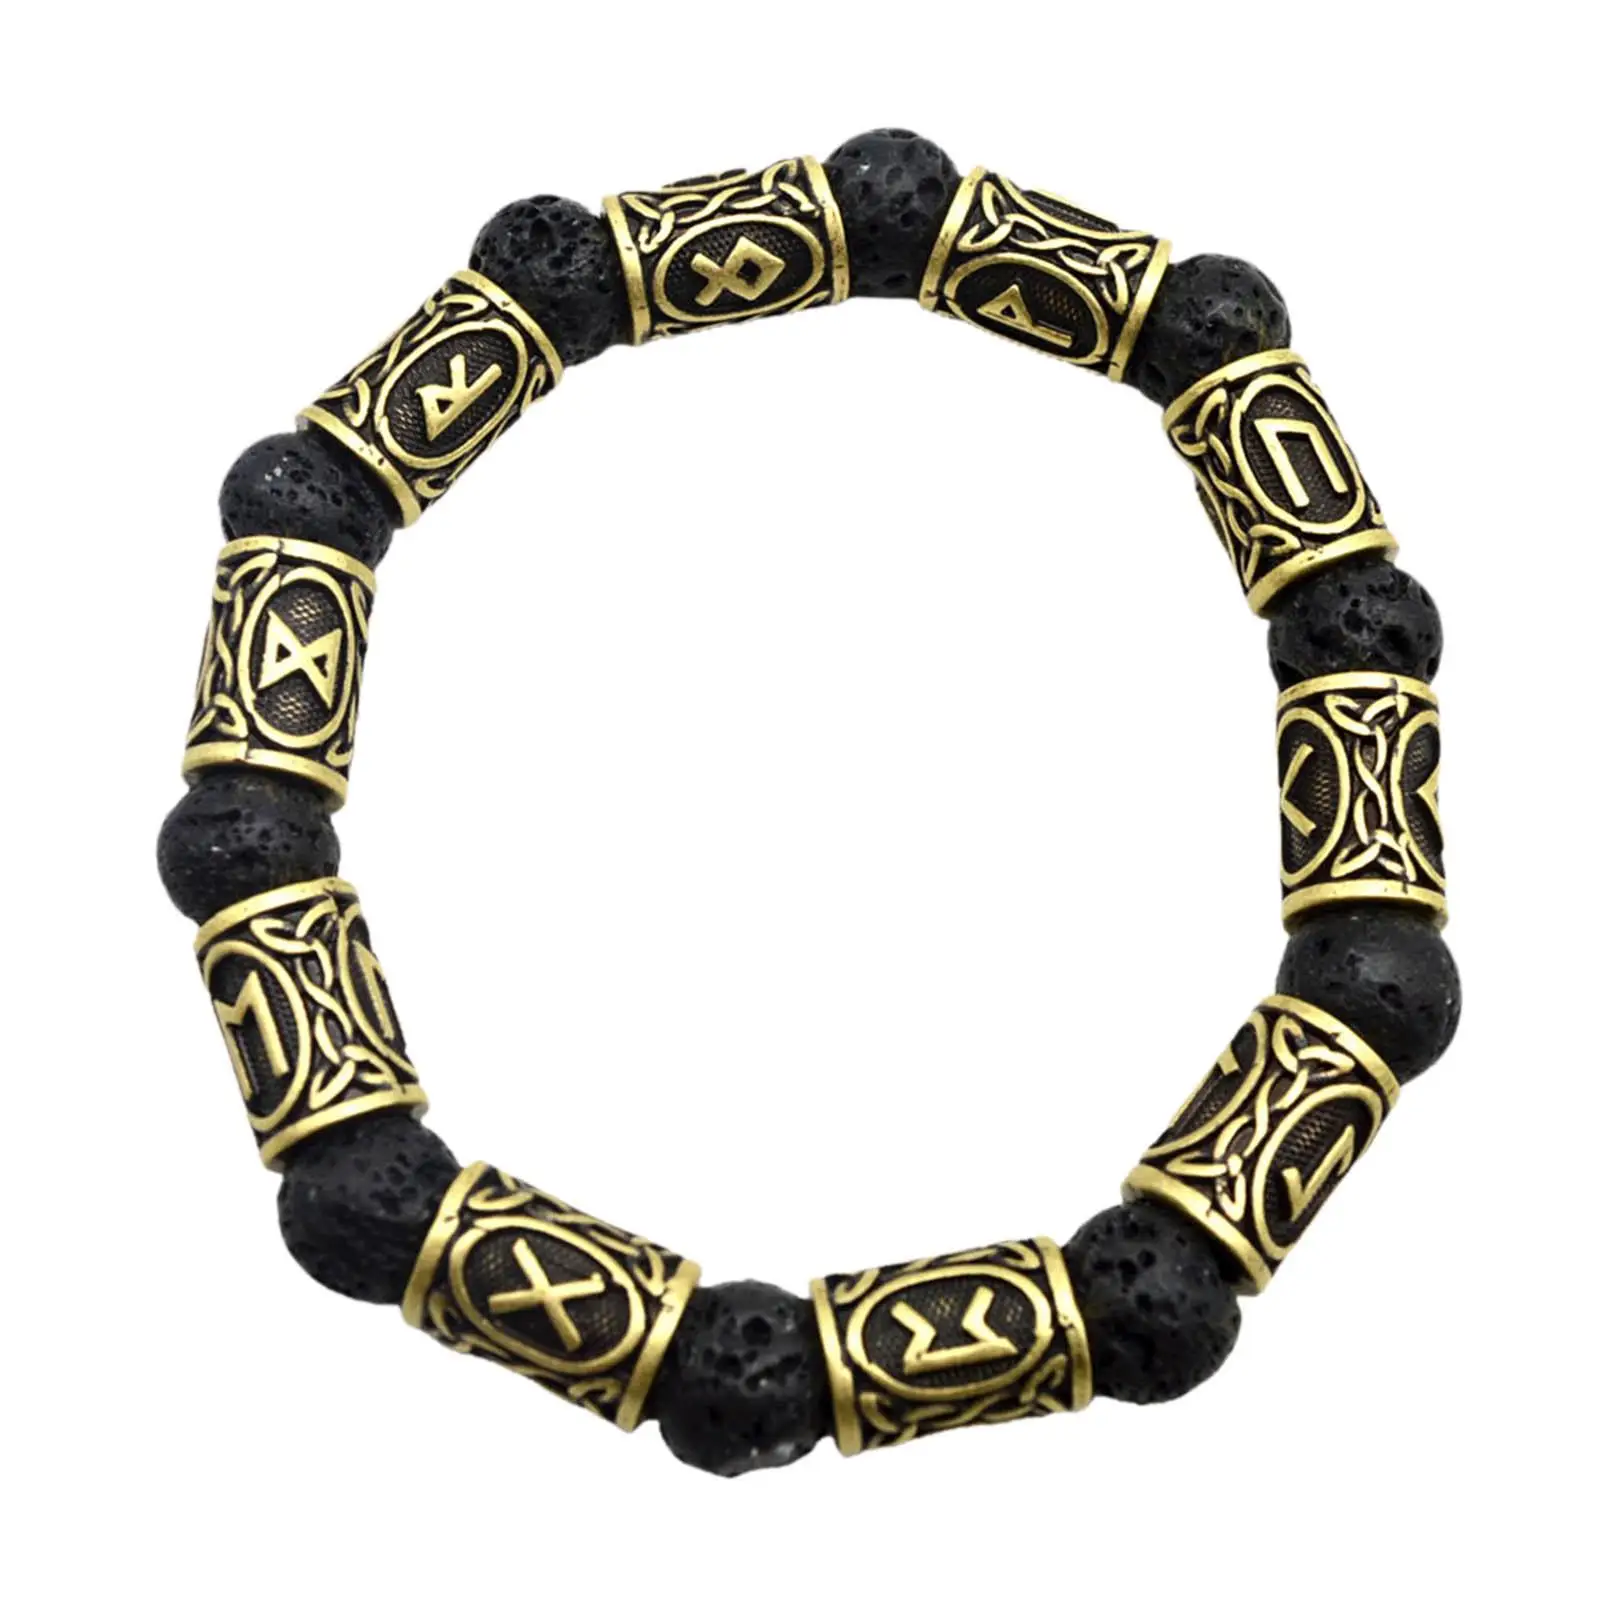 Viking Rune Antique Beads Bracelet,Natural Stone Bangle Accessories,Jewelry Gift Handmade Charm for Men Women